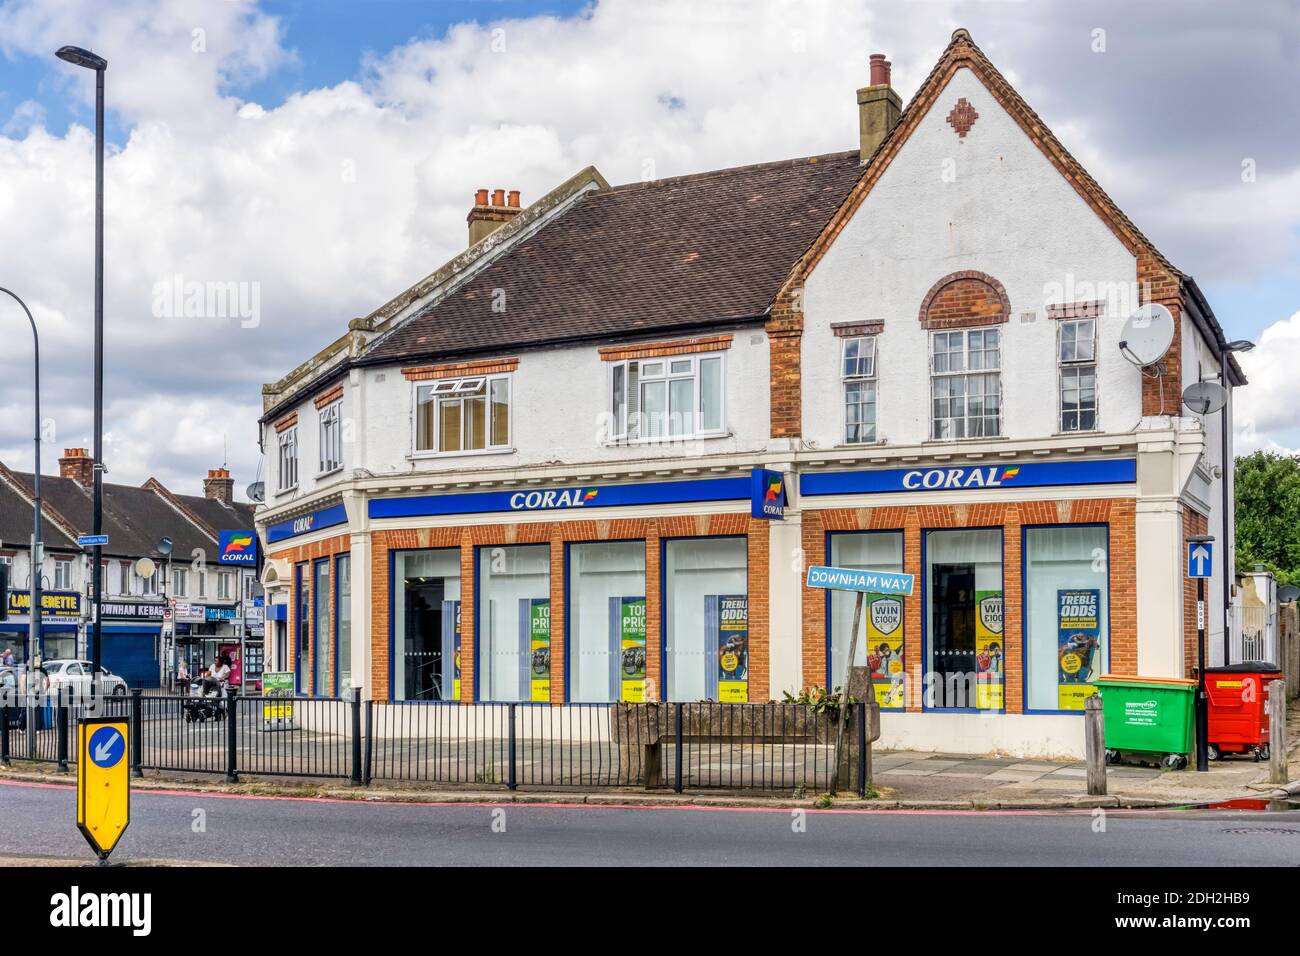 Coral betting shop in Downham Way, Lewisham, South London. Stock Photo